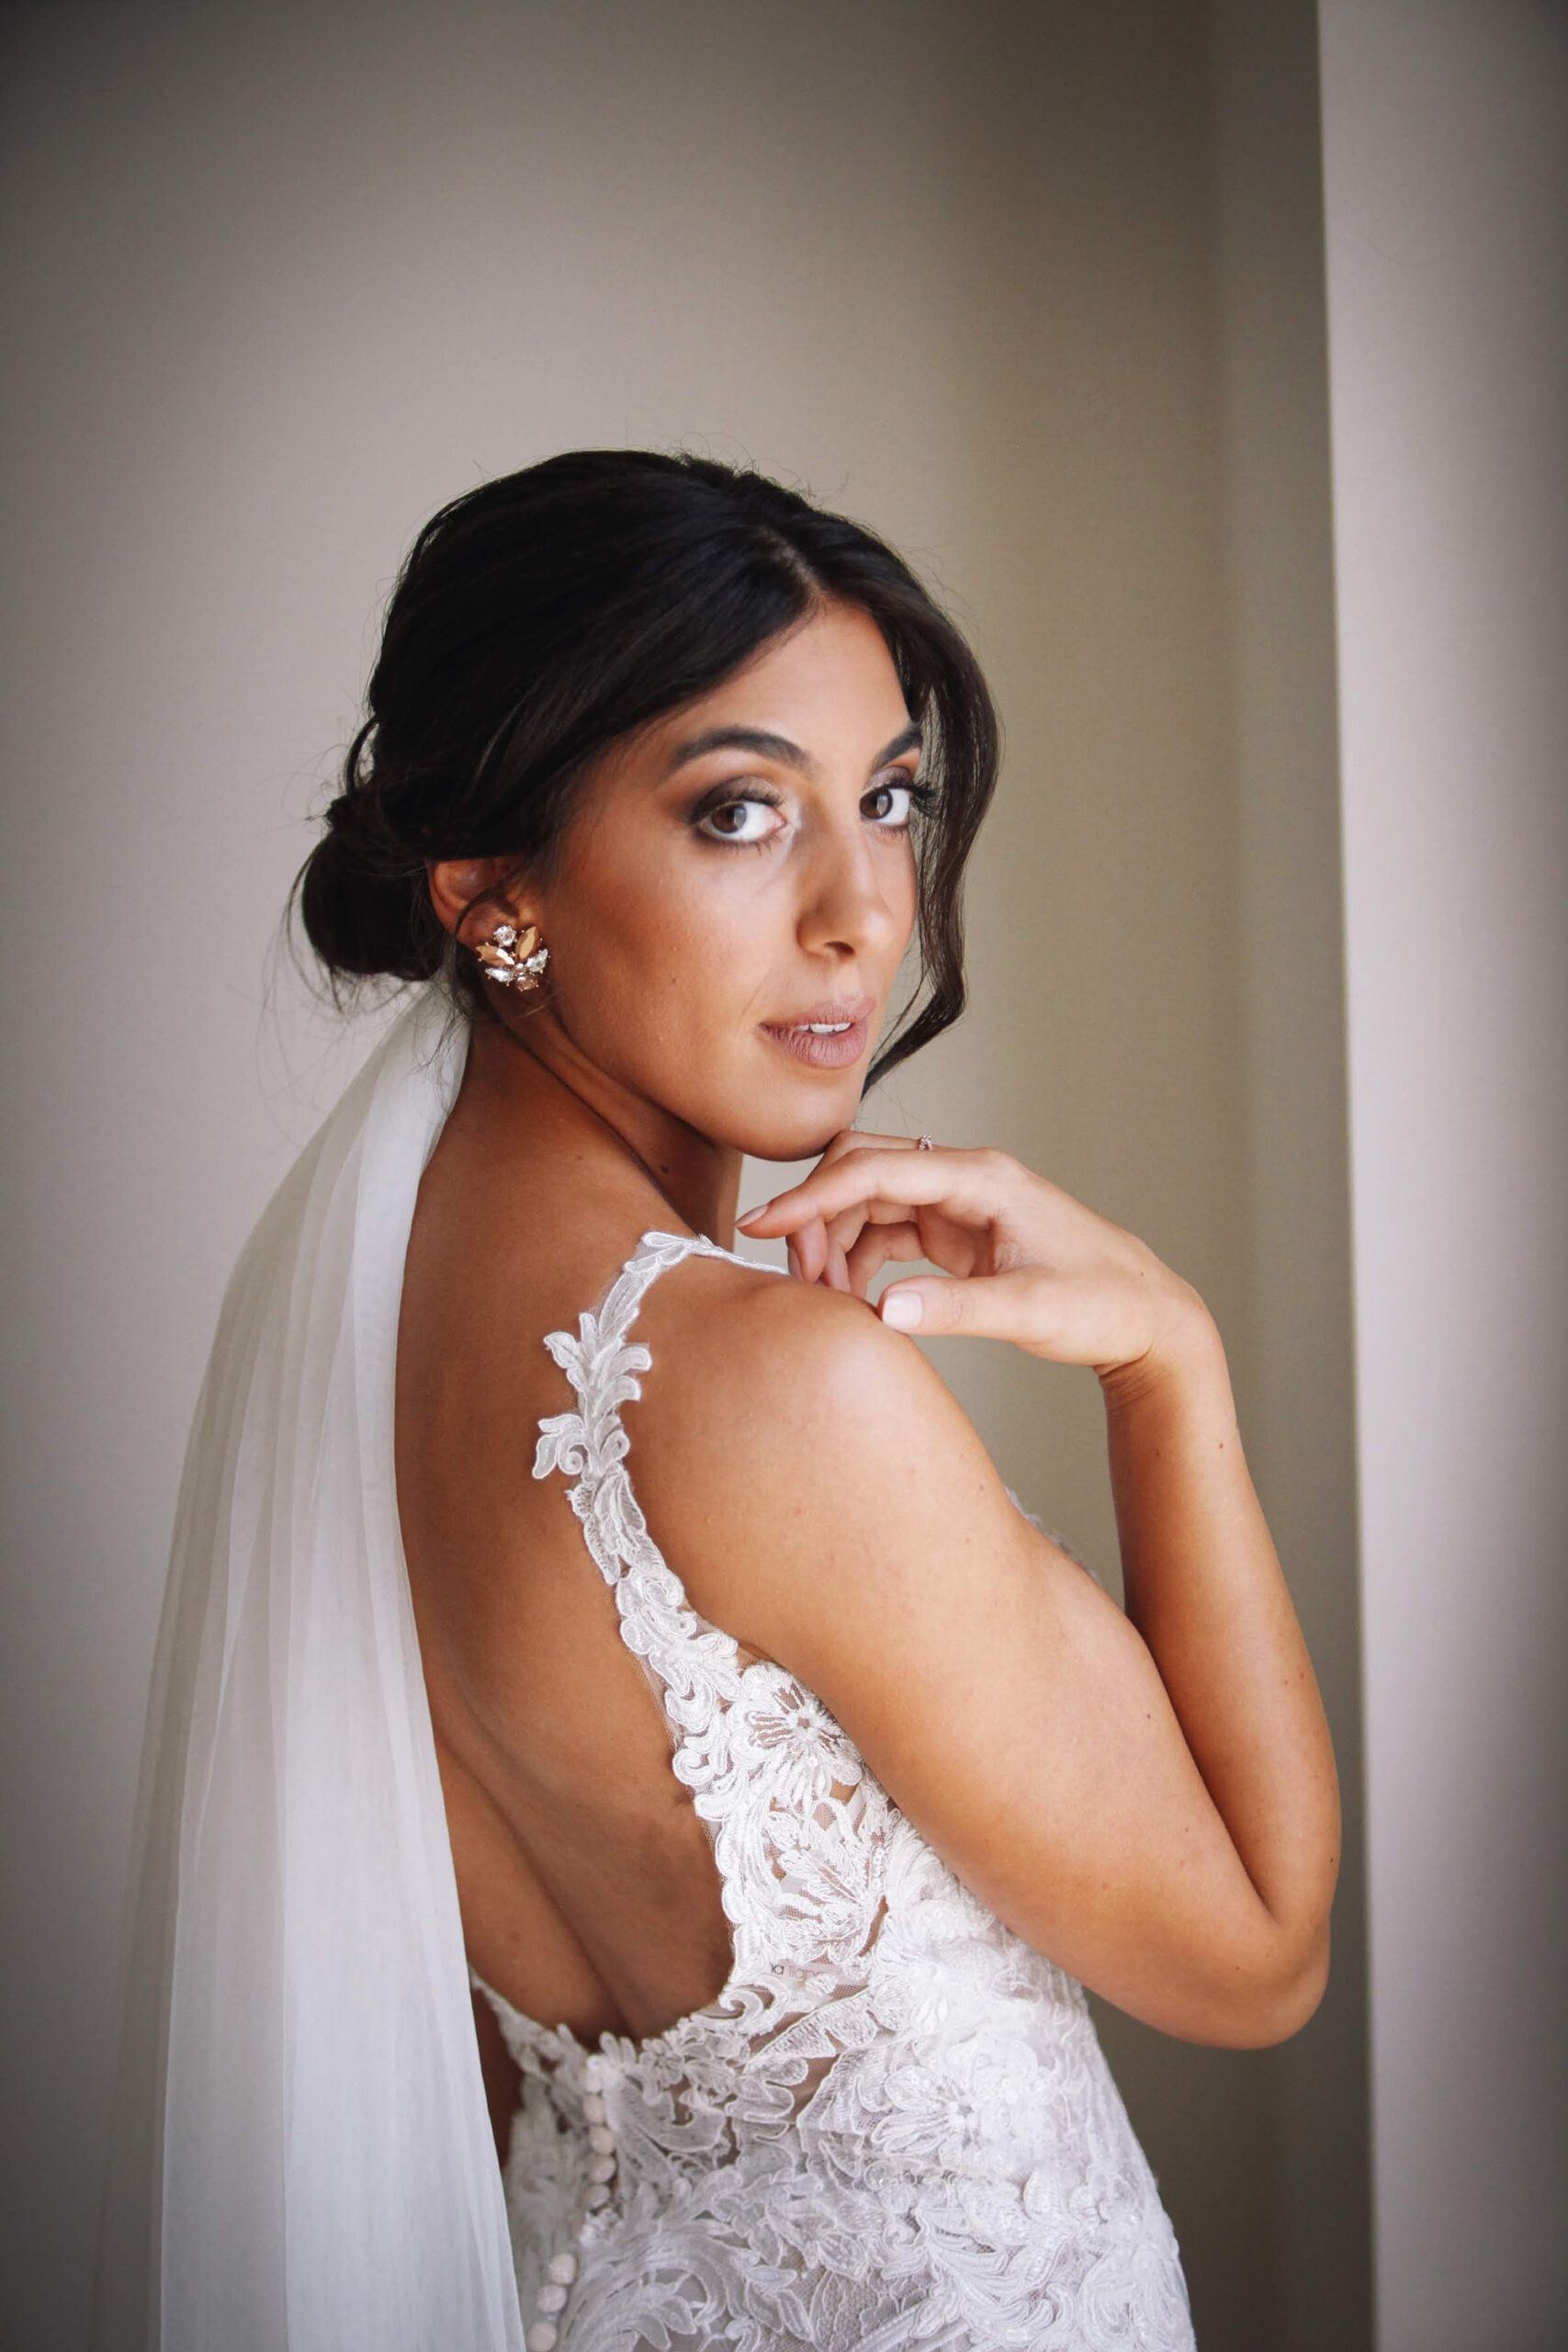 Carla Bruno Elegant White Wedding Panache Photography SBS 009 scaled